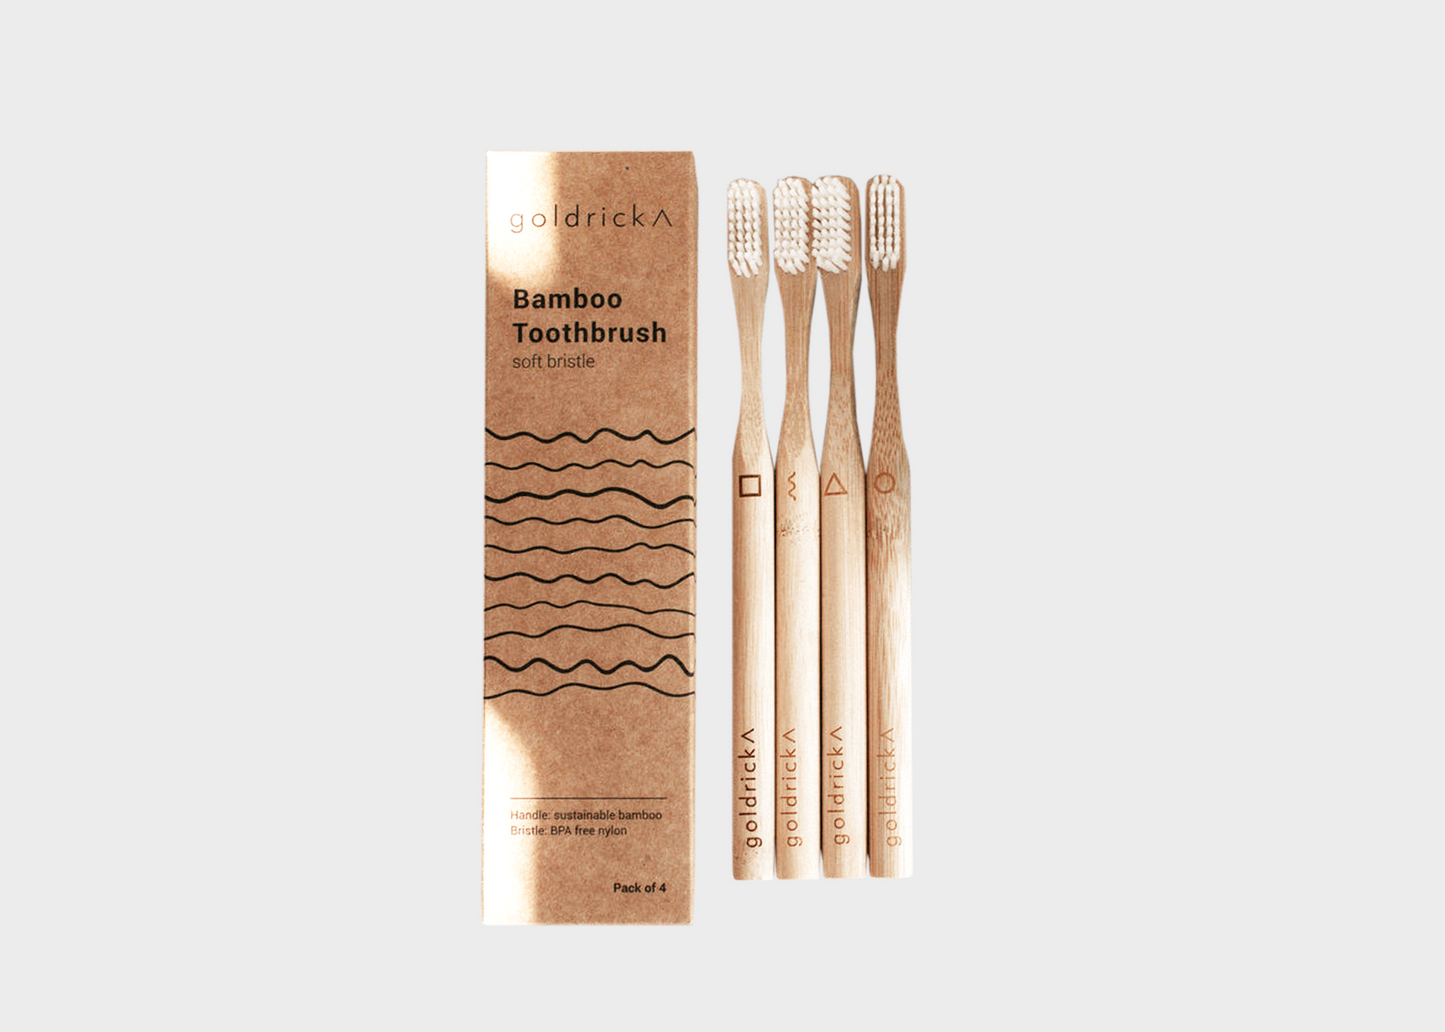 Bamboo toothbrush set next to box by Goldrick